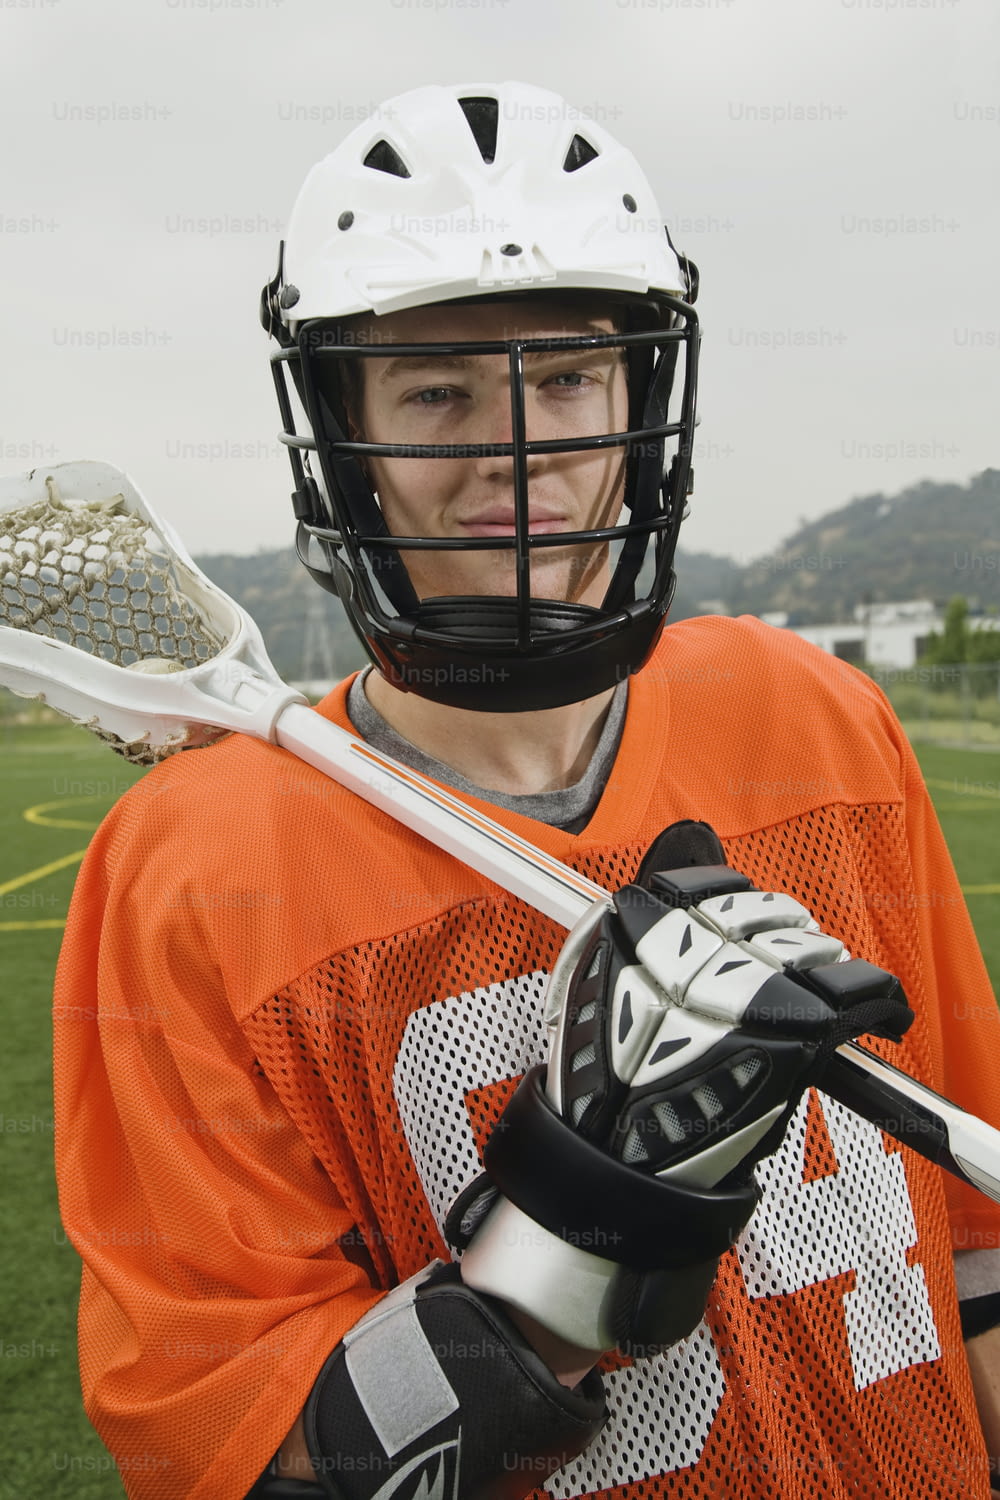 a man in an orange jersey holding a lacrosse stick